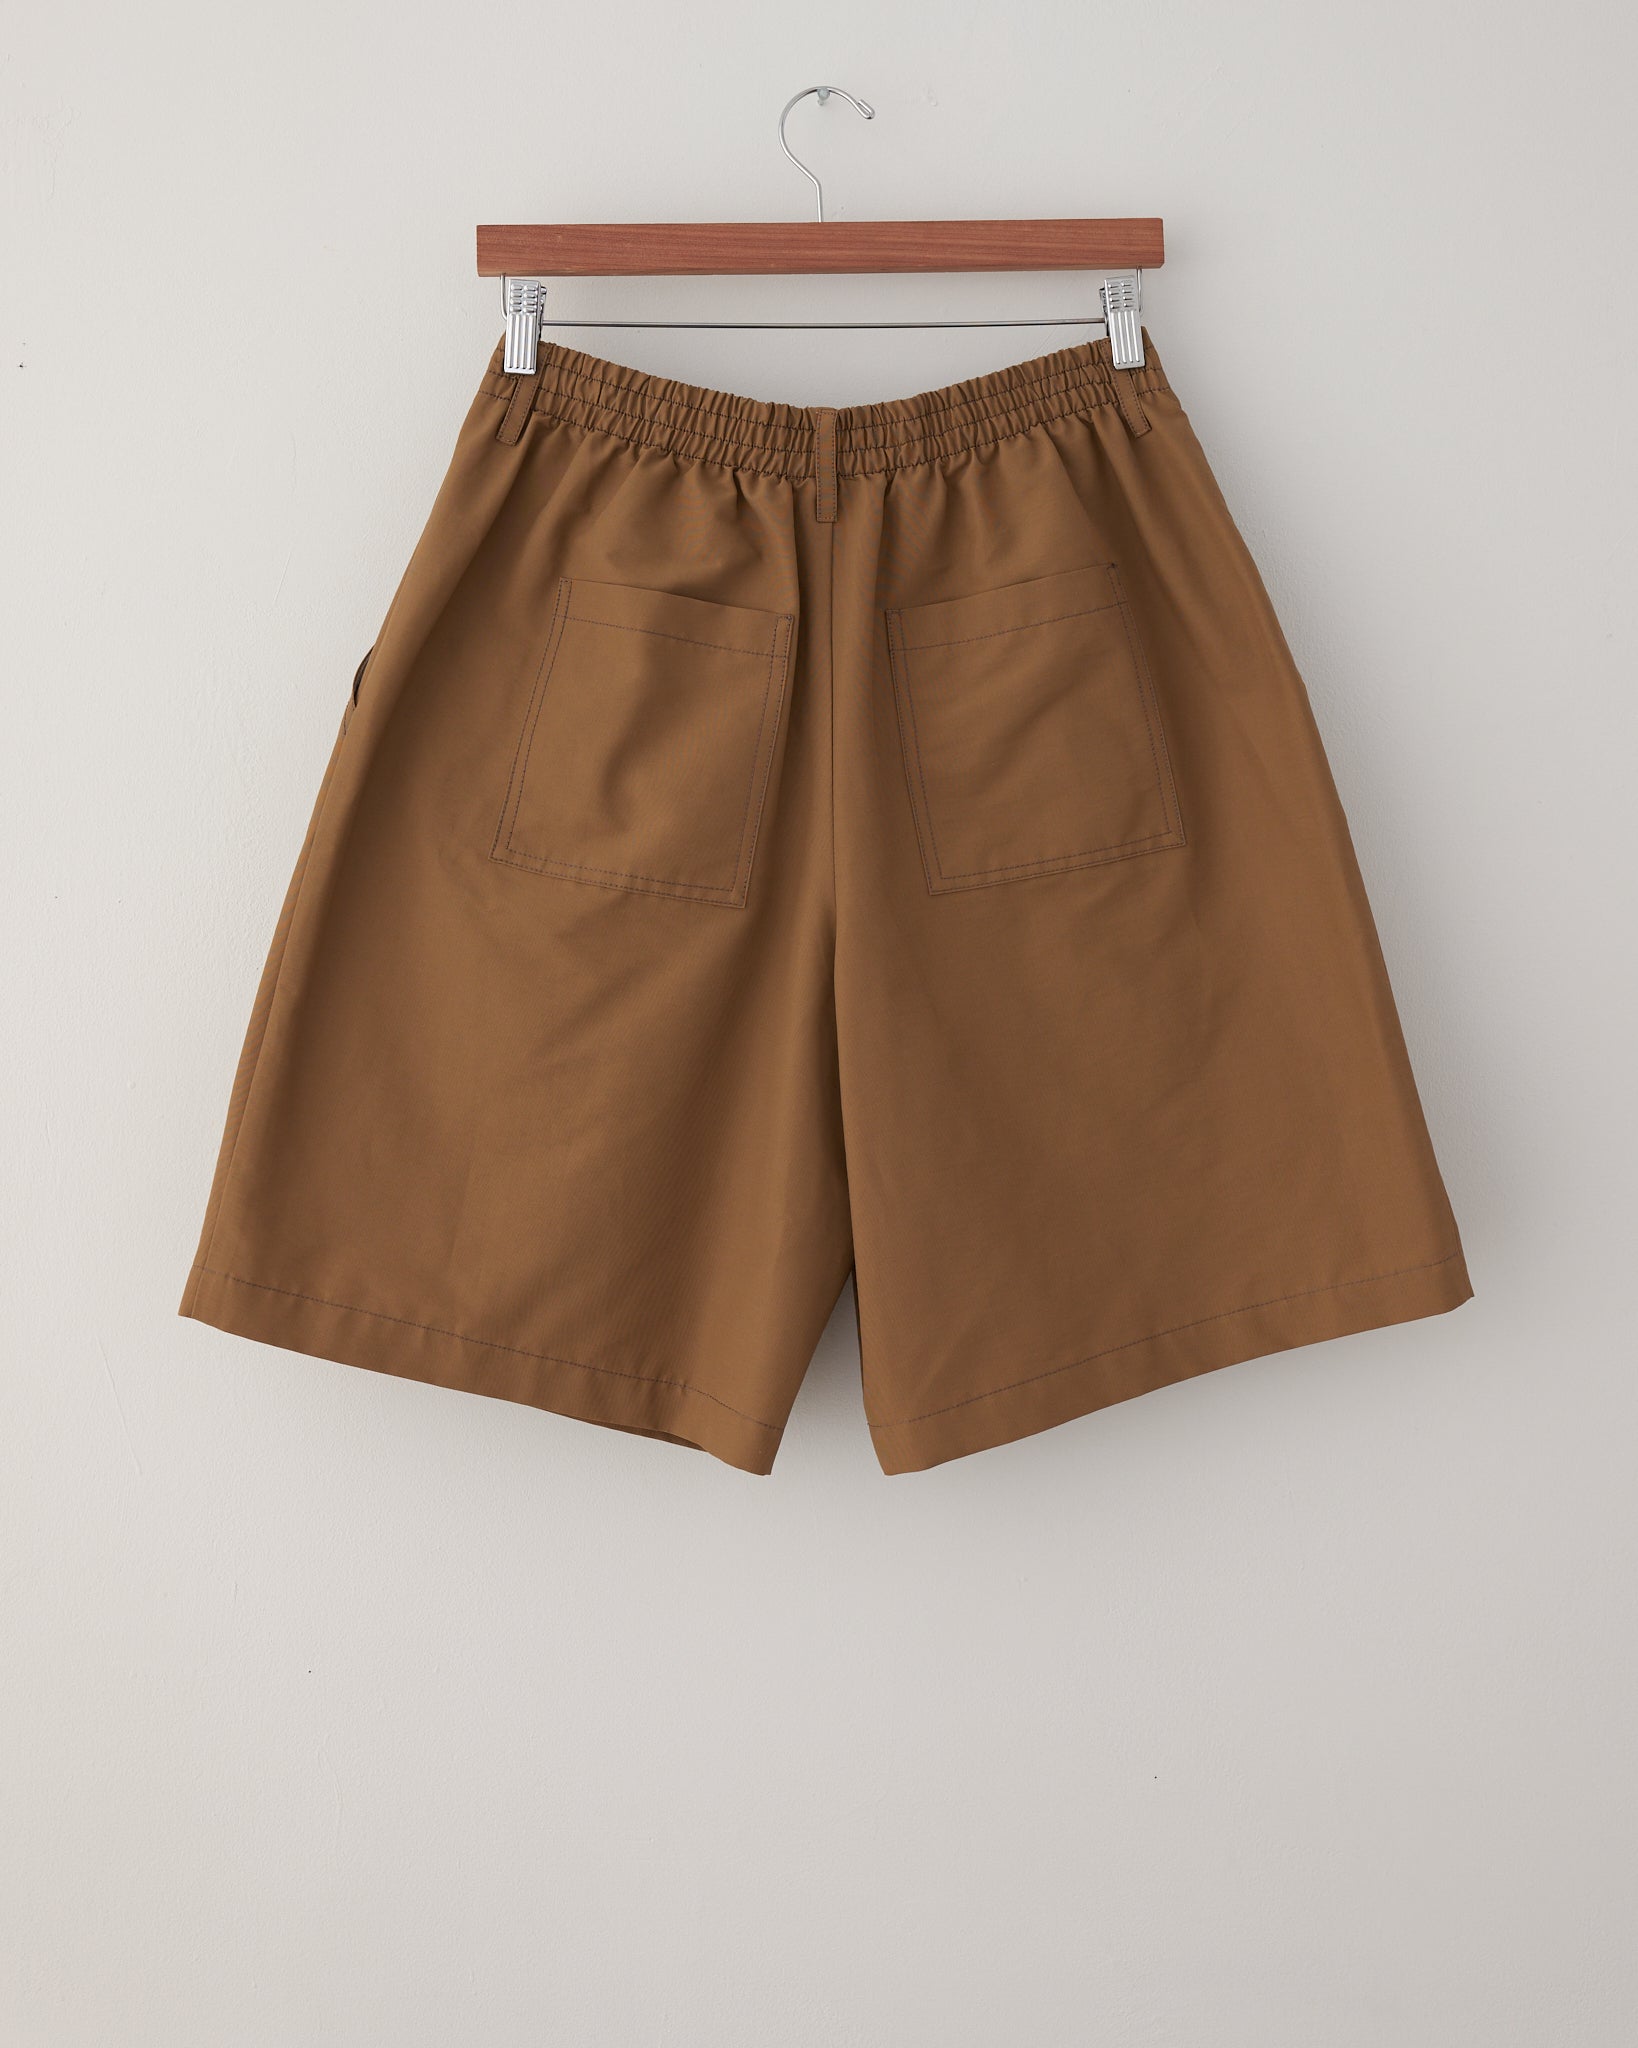 Single Pleat Shorts, Cotton Nylon